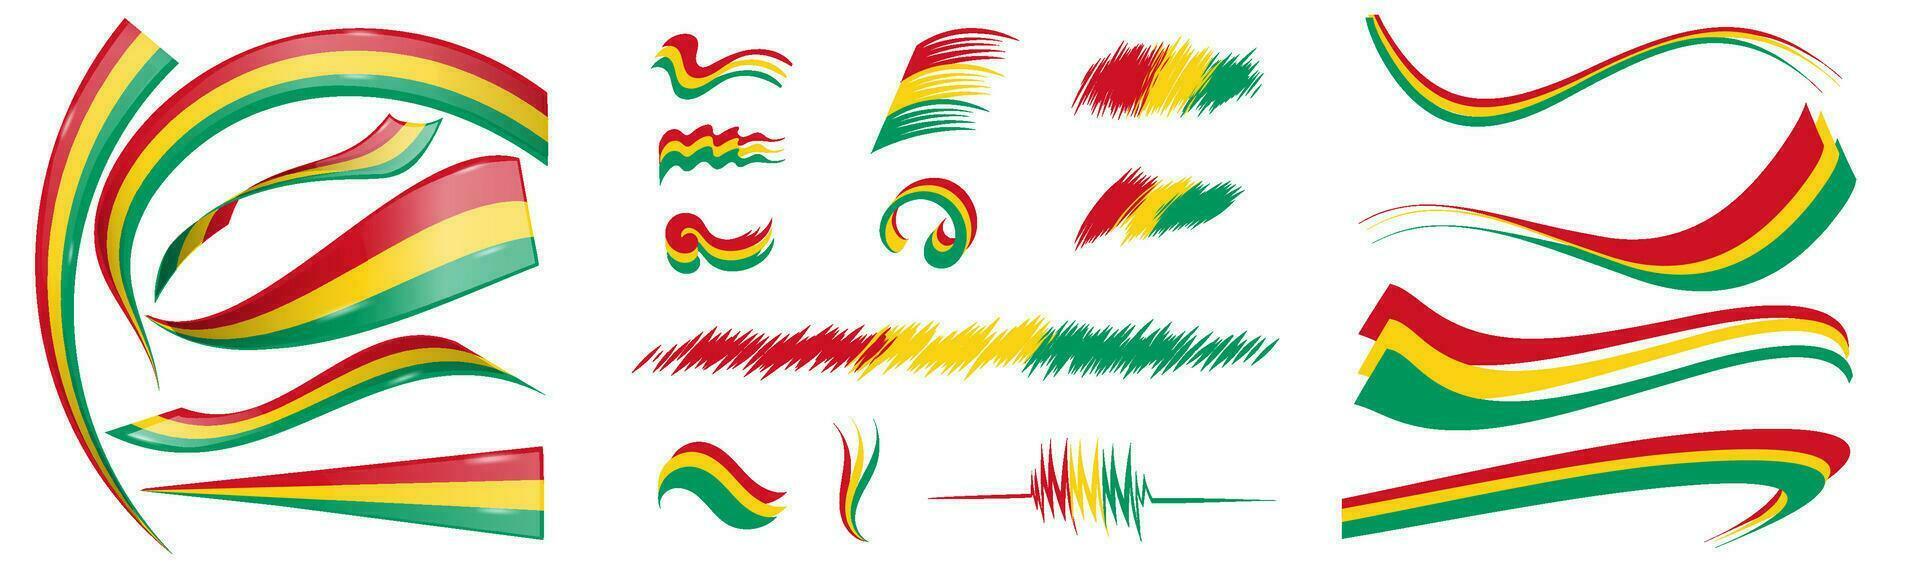 Guinea flag set elements, vector illustration on a white background